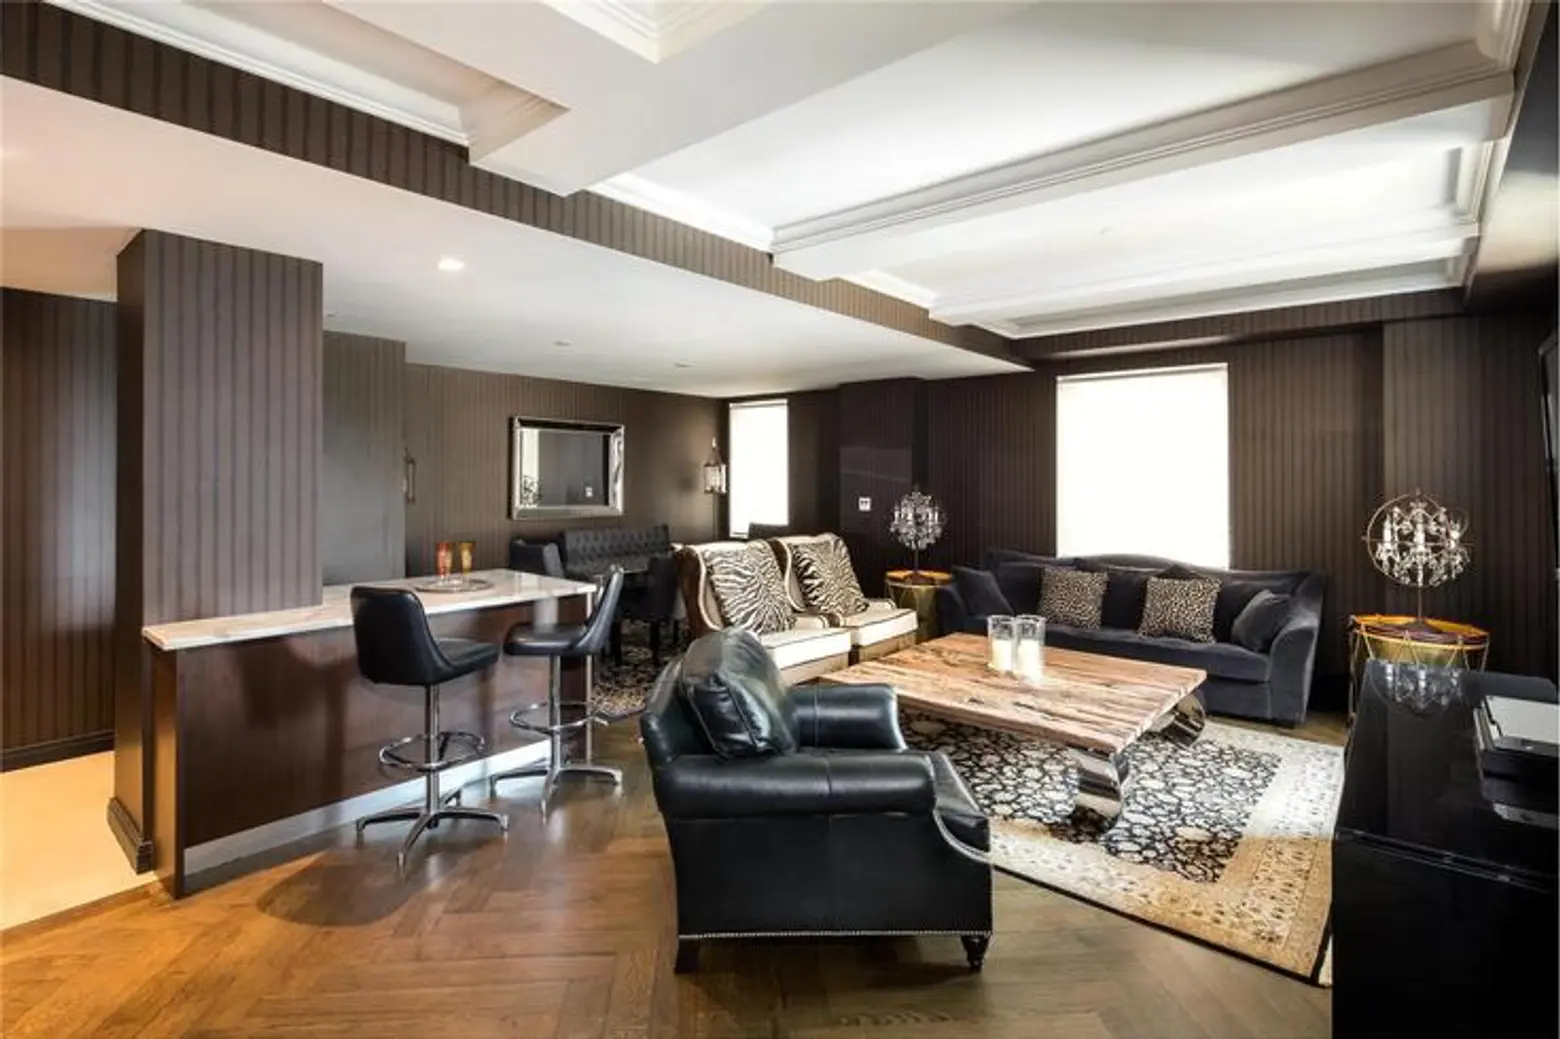 Essex House, Liam Gallagher’s apartment interior, Oasis singer apartment for sale